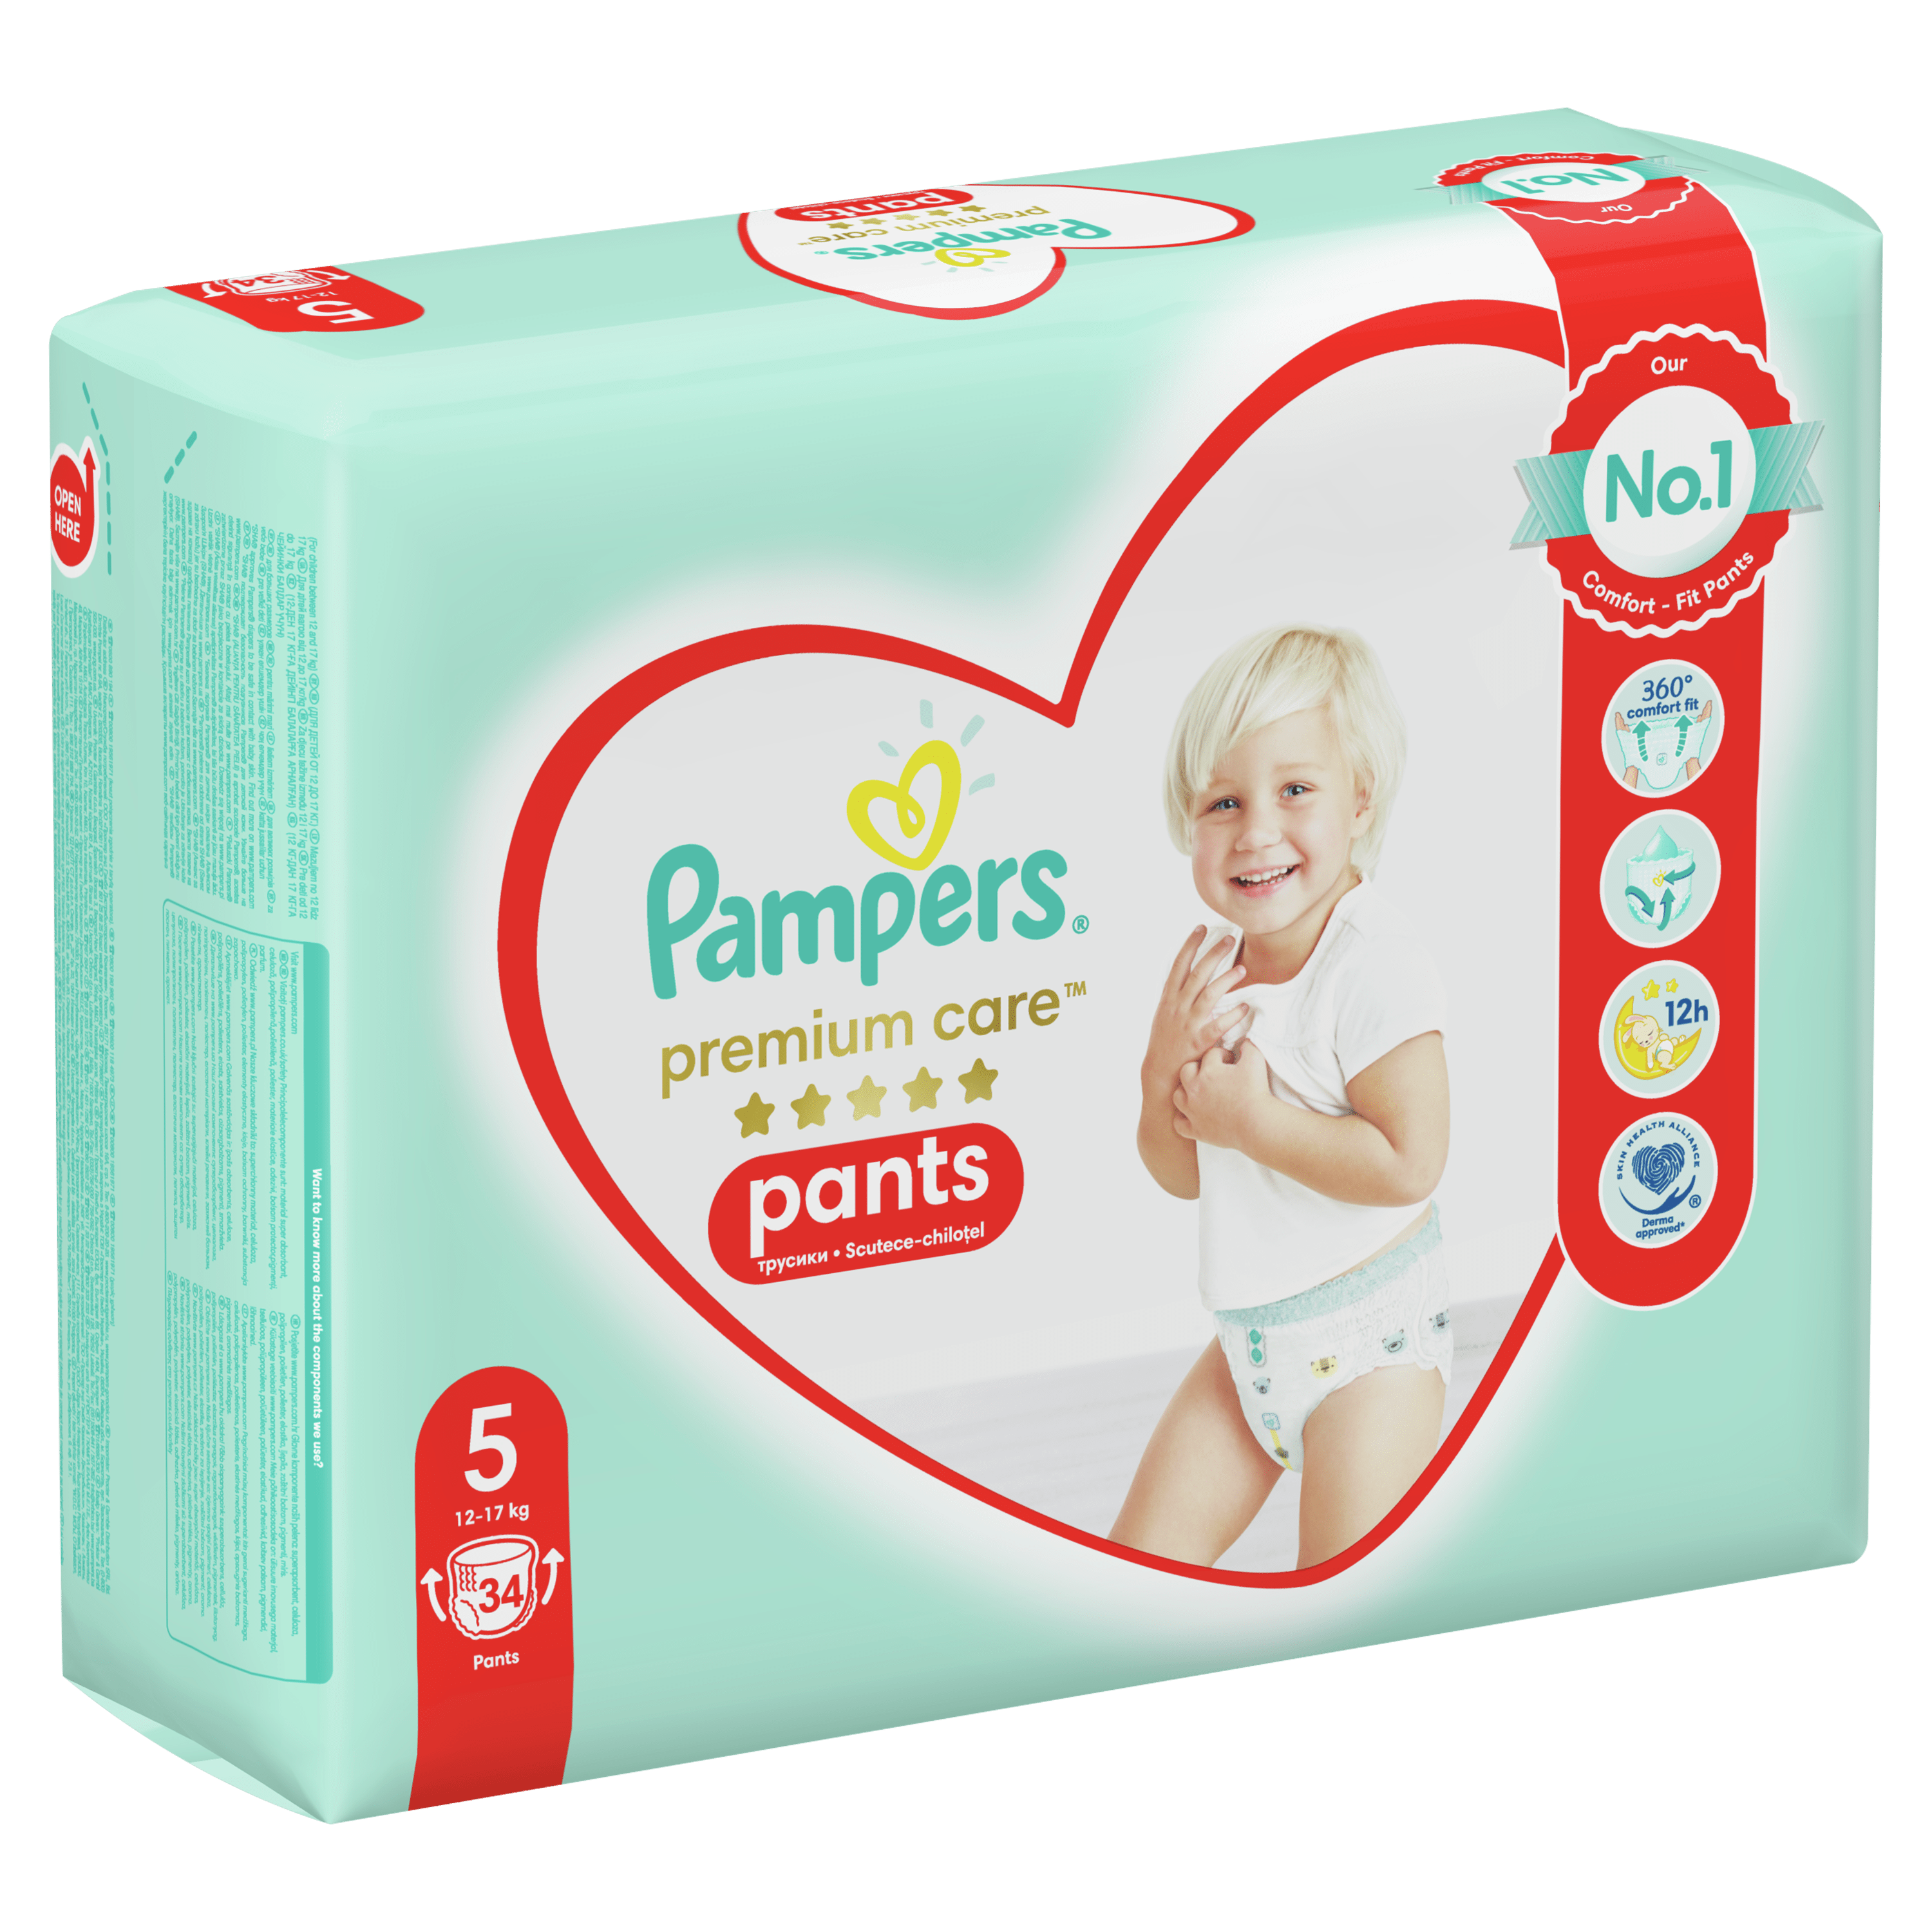 Підгузки - трусики Pampers Premium Care Pants Розмір 5 (12-17 кг), 34 шт